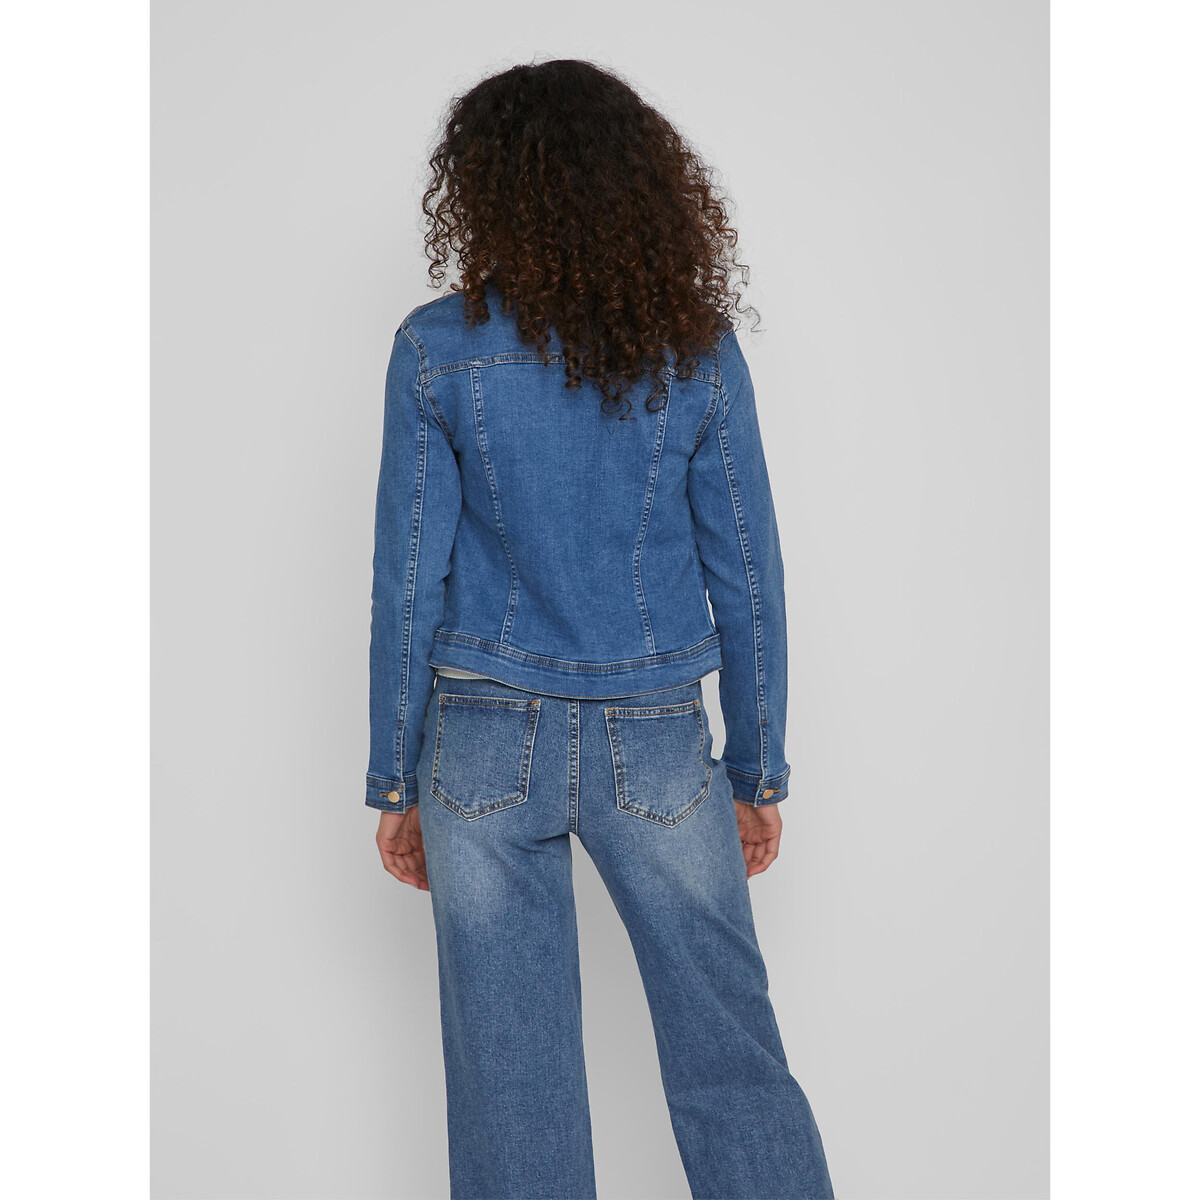 Жакет Короткий из джинсовой ткани M синий LaRedoute, размер M - фото 3